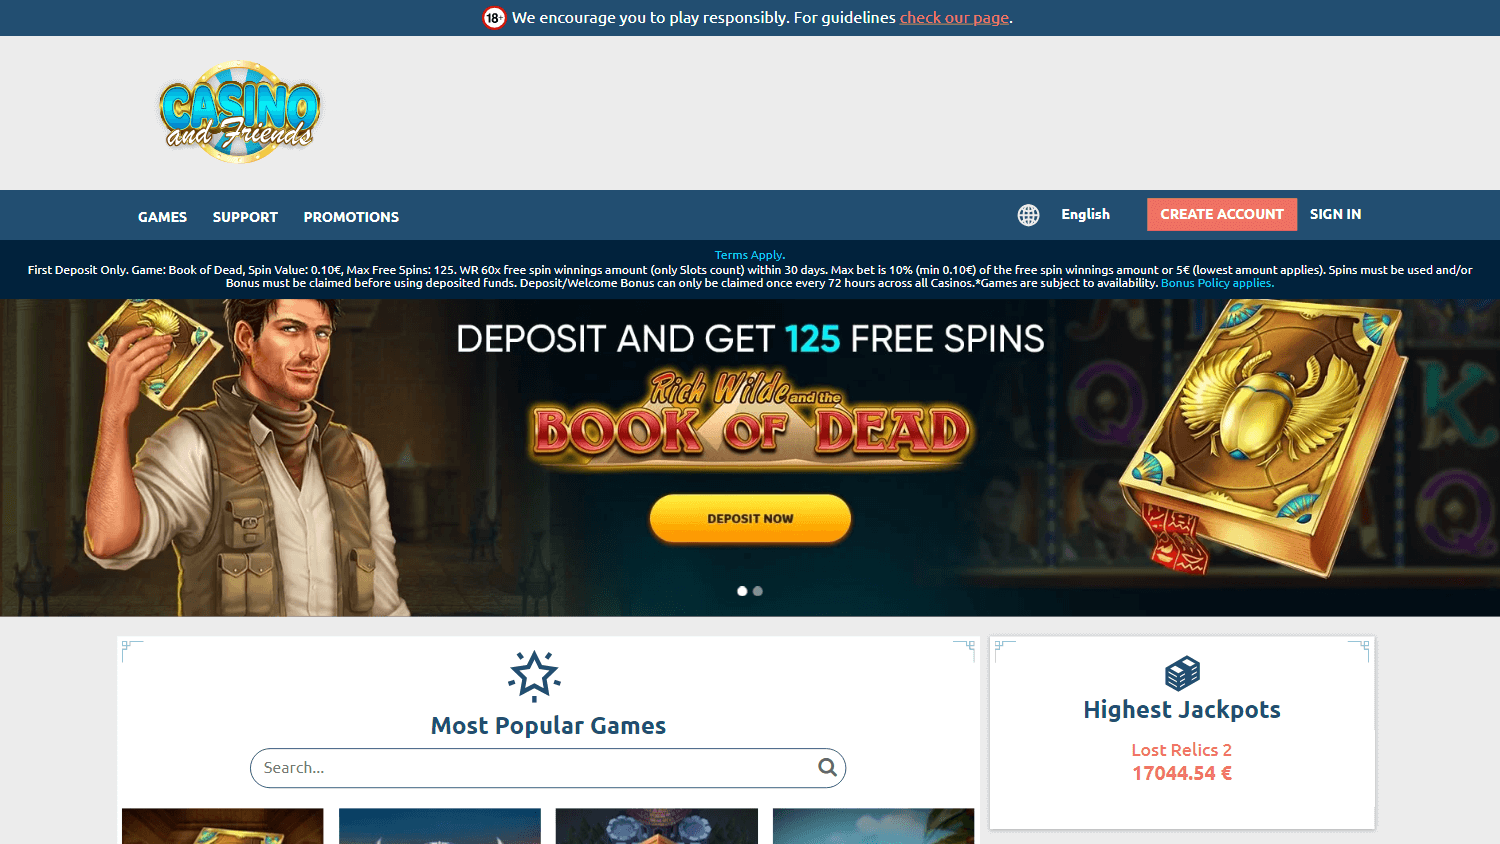 casinoandfriends_casino_homepage_desktop